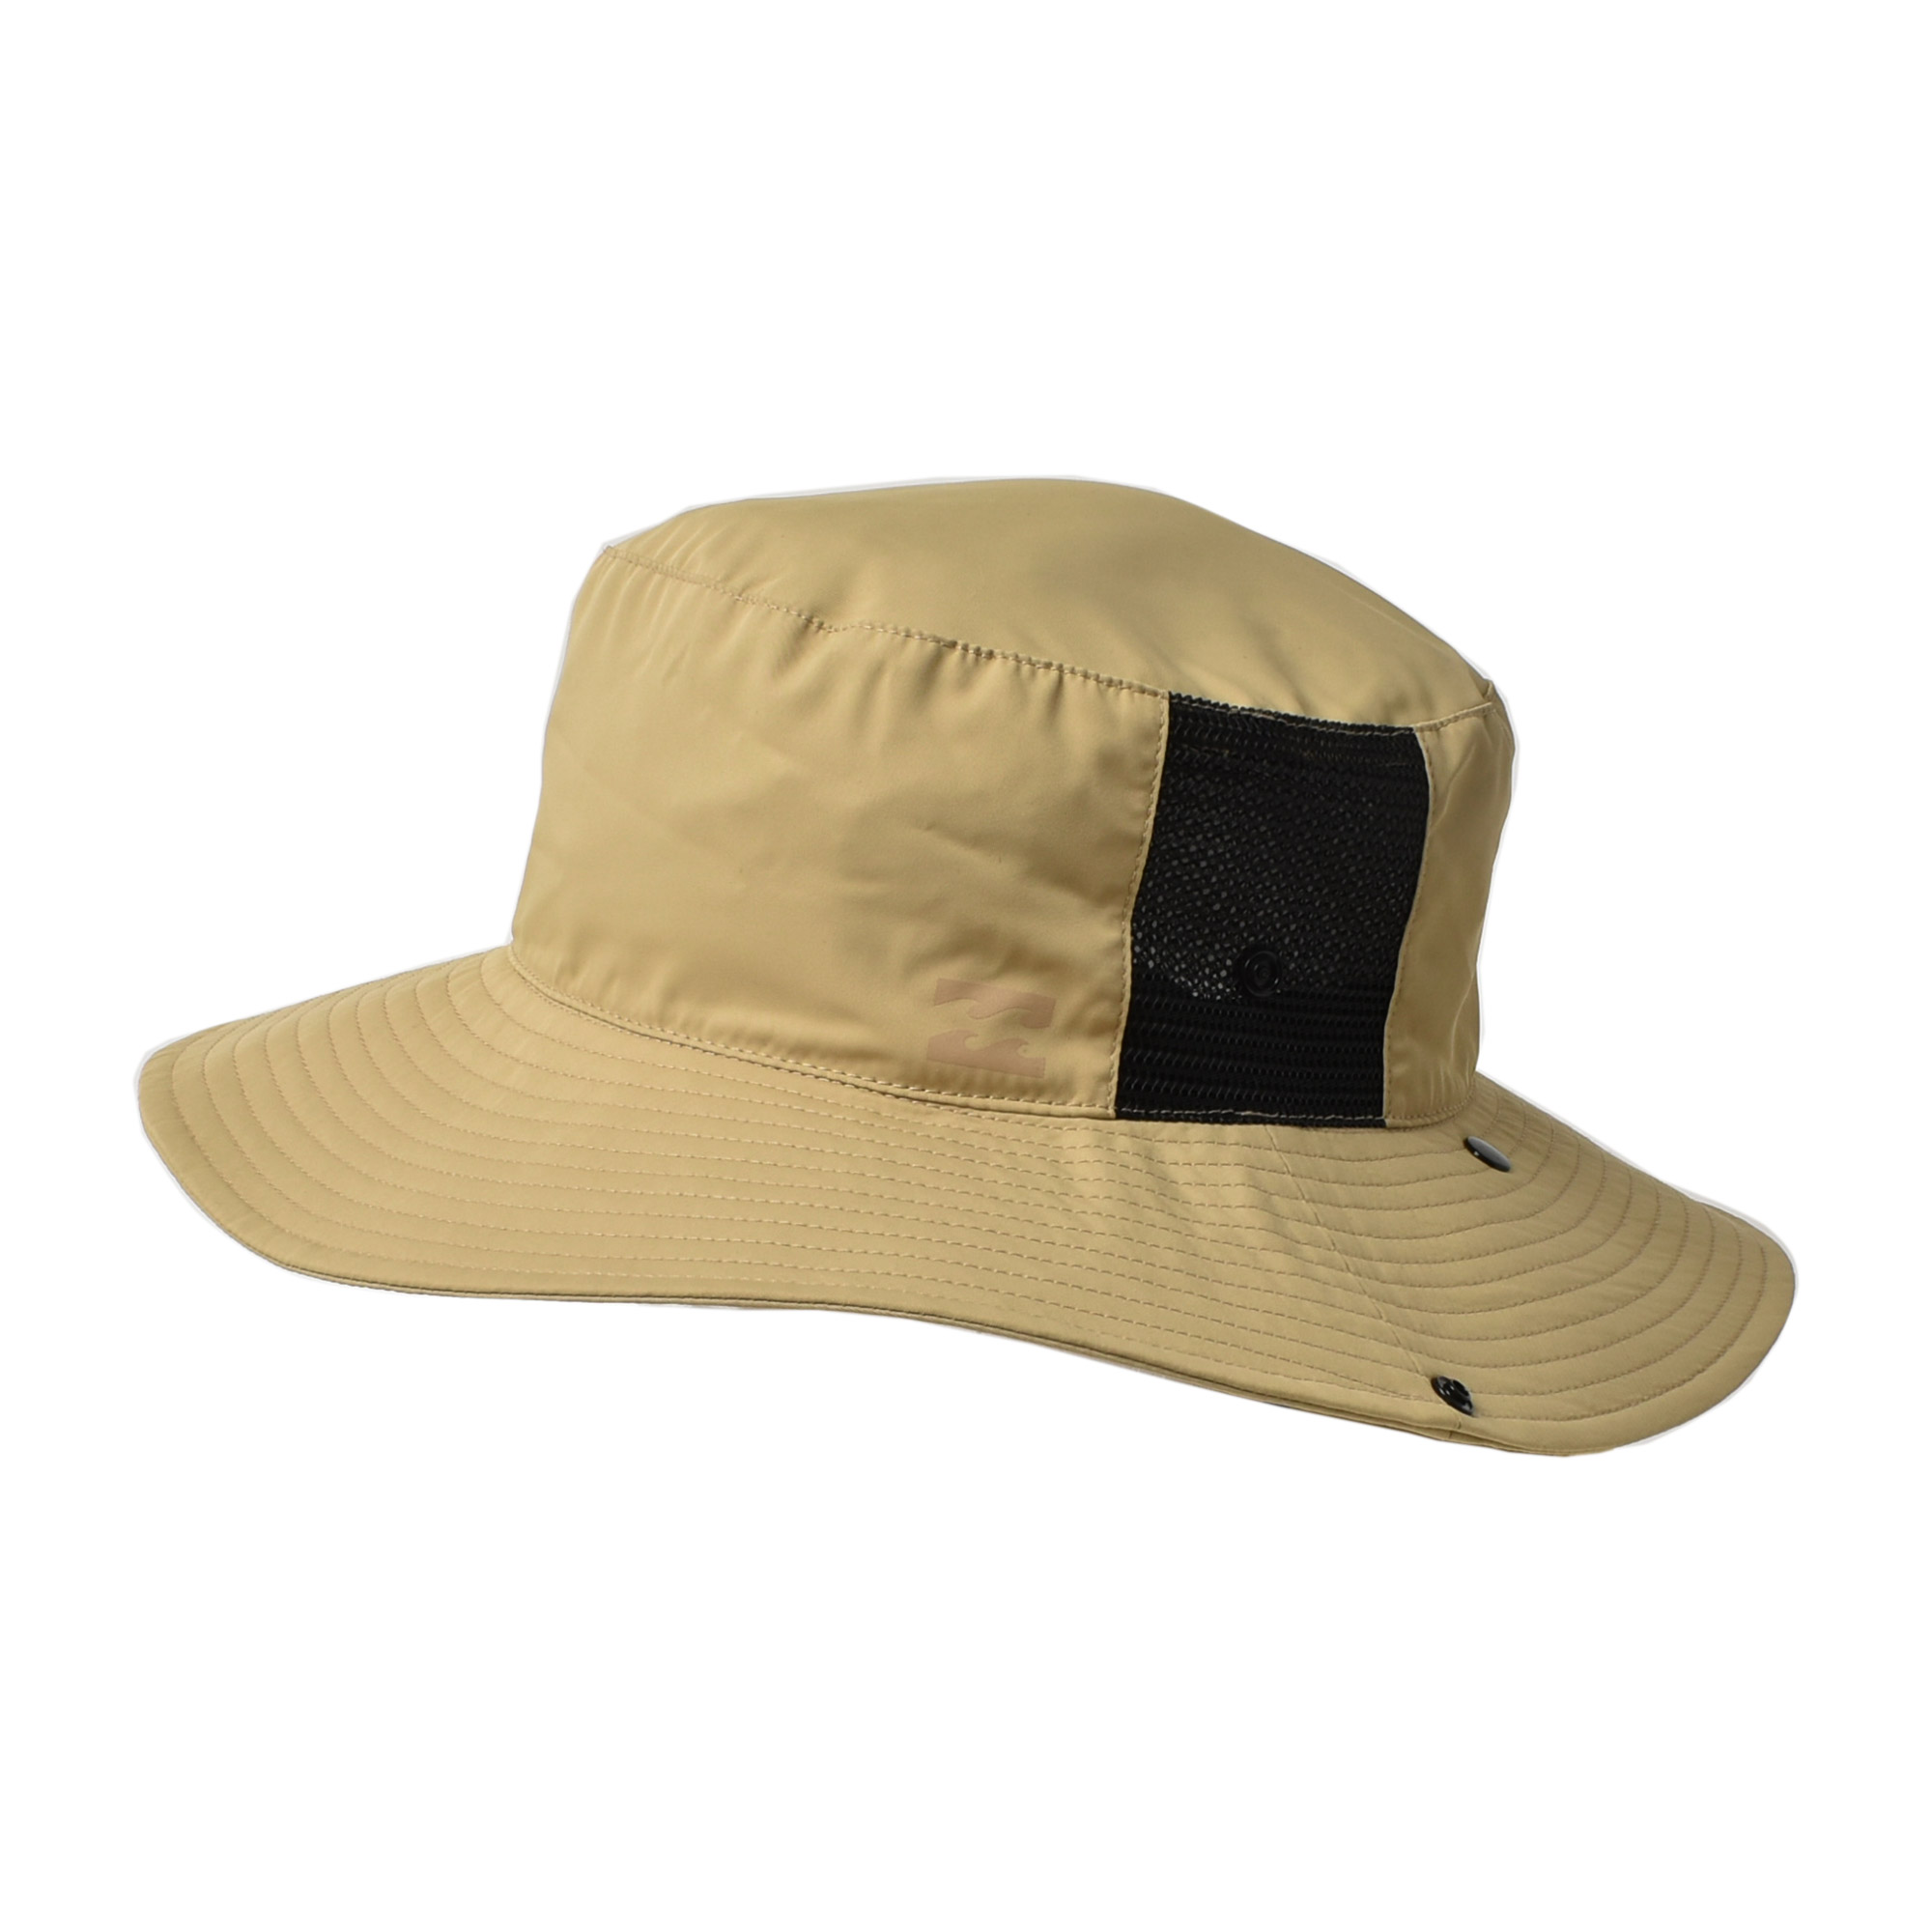 SALE ビラボン 帽子 レディース BEACH HAT BILLABONG BE013922 ブラ...